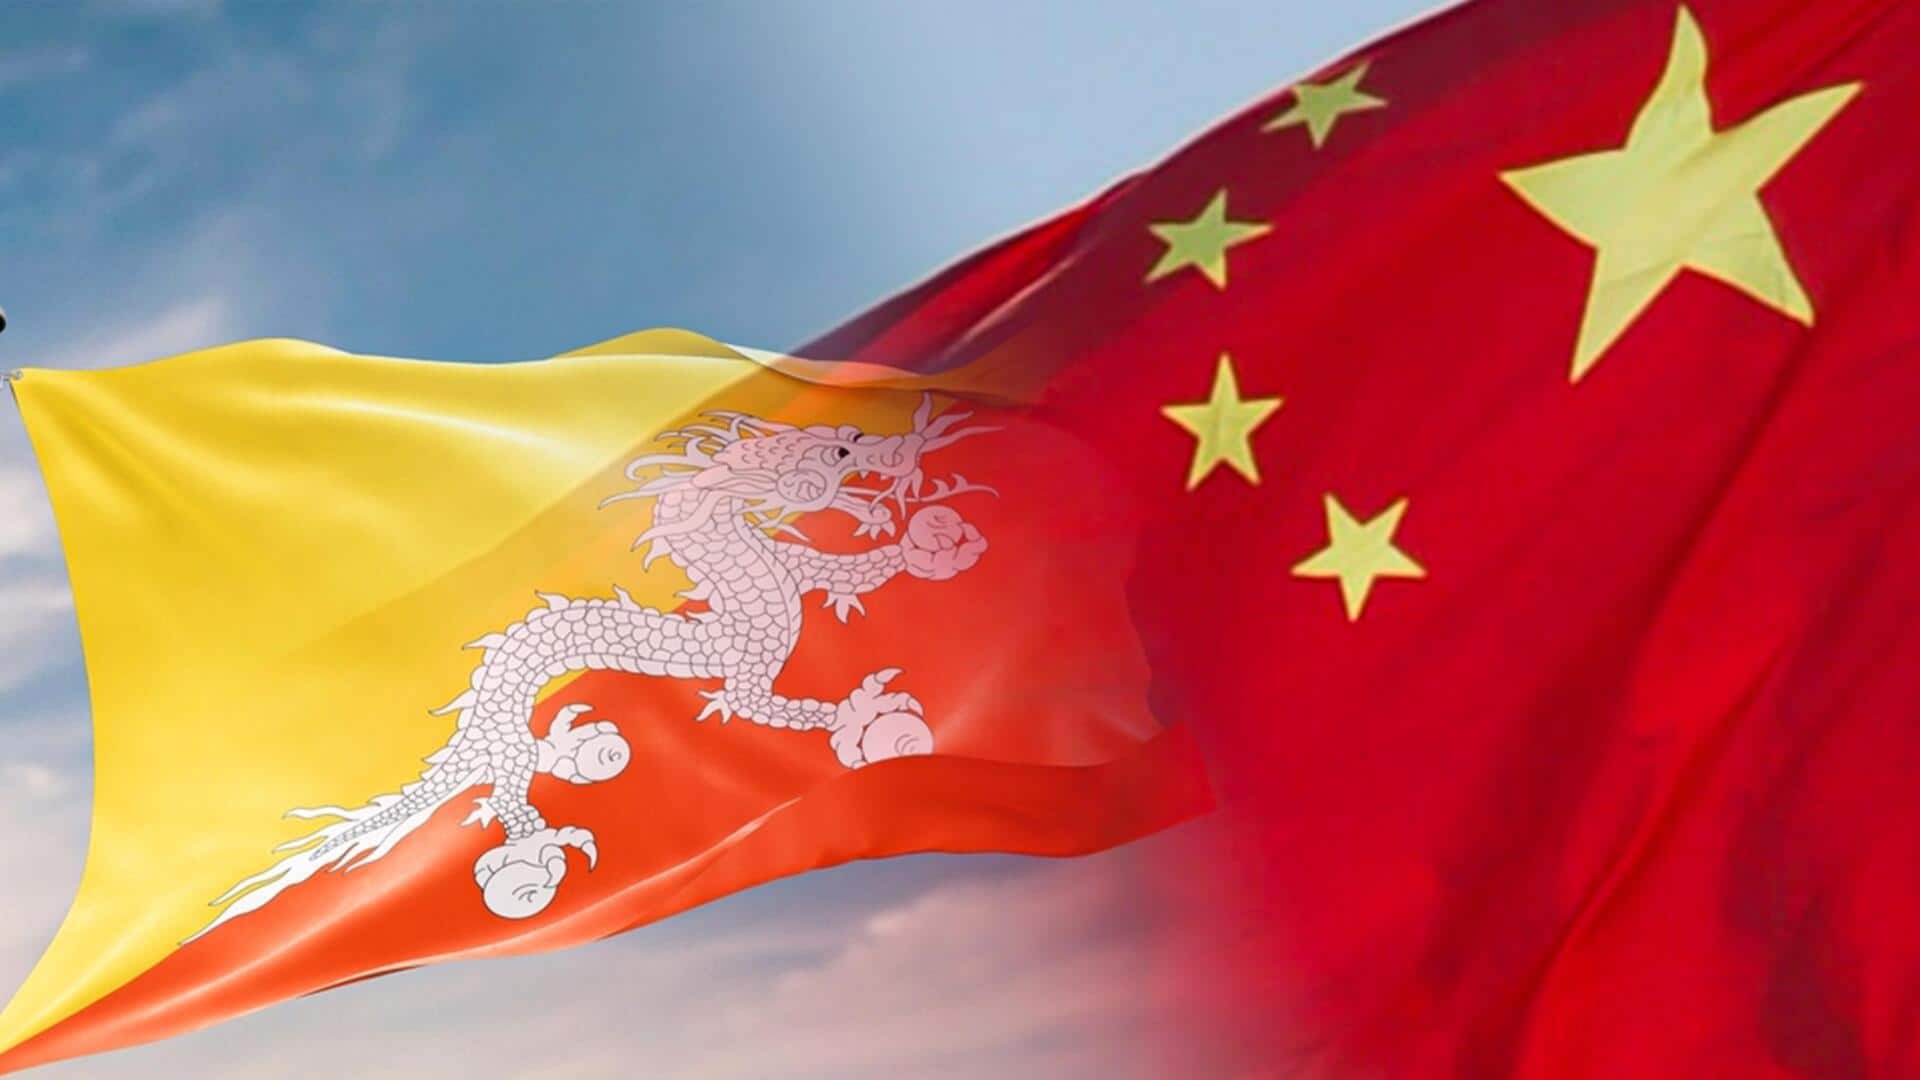 China builds villages, barracks in Bhutan's territory amid border negotiations